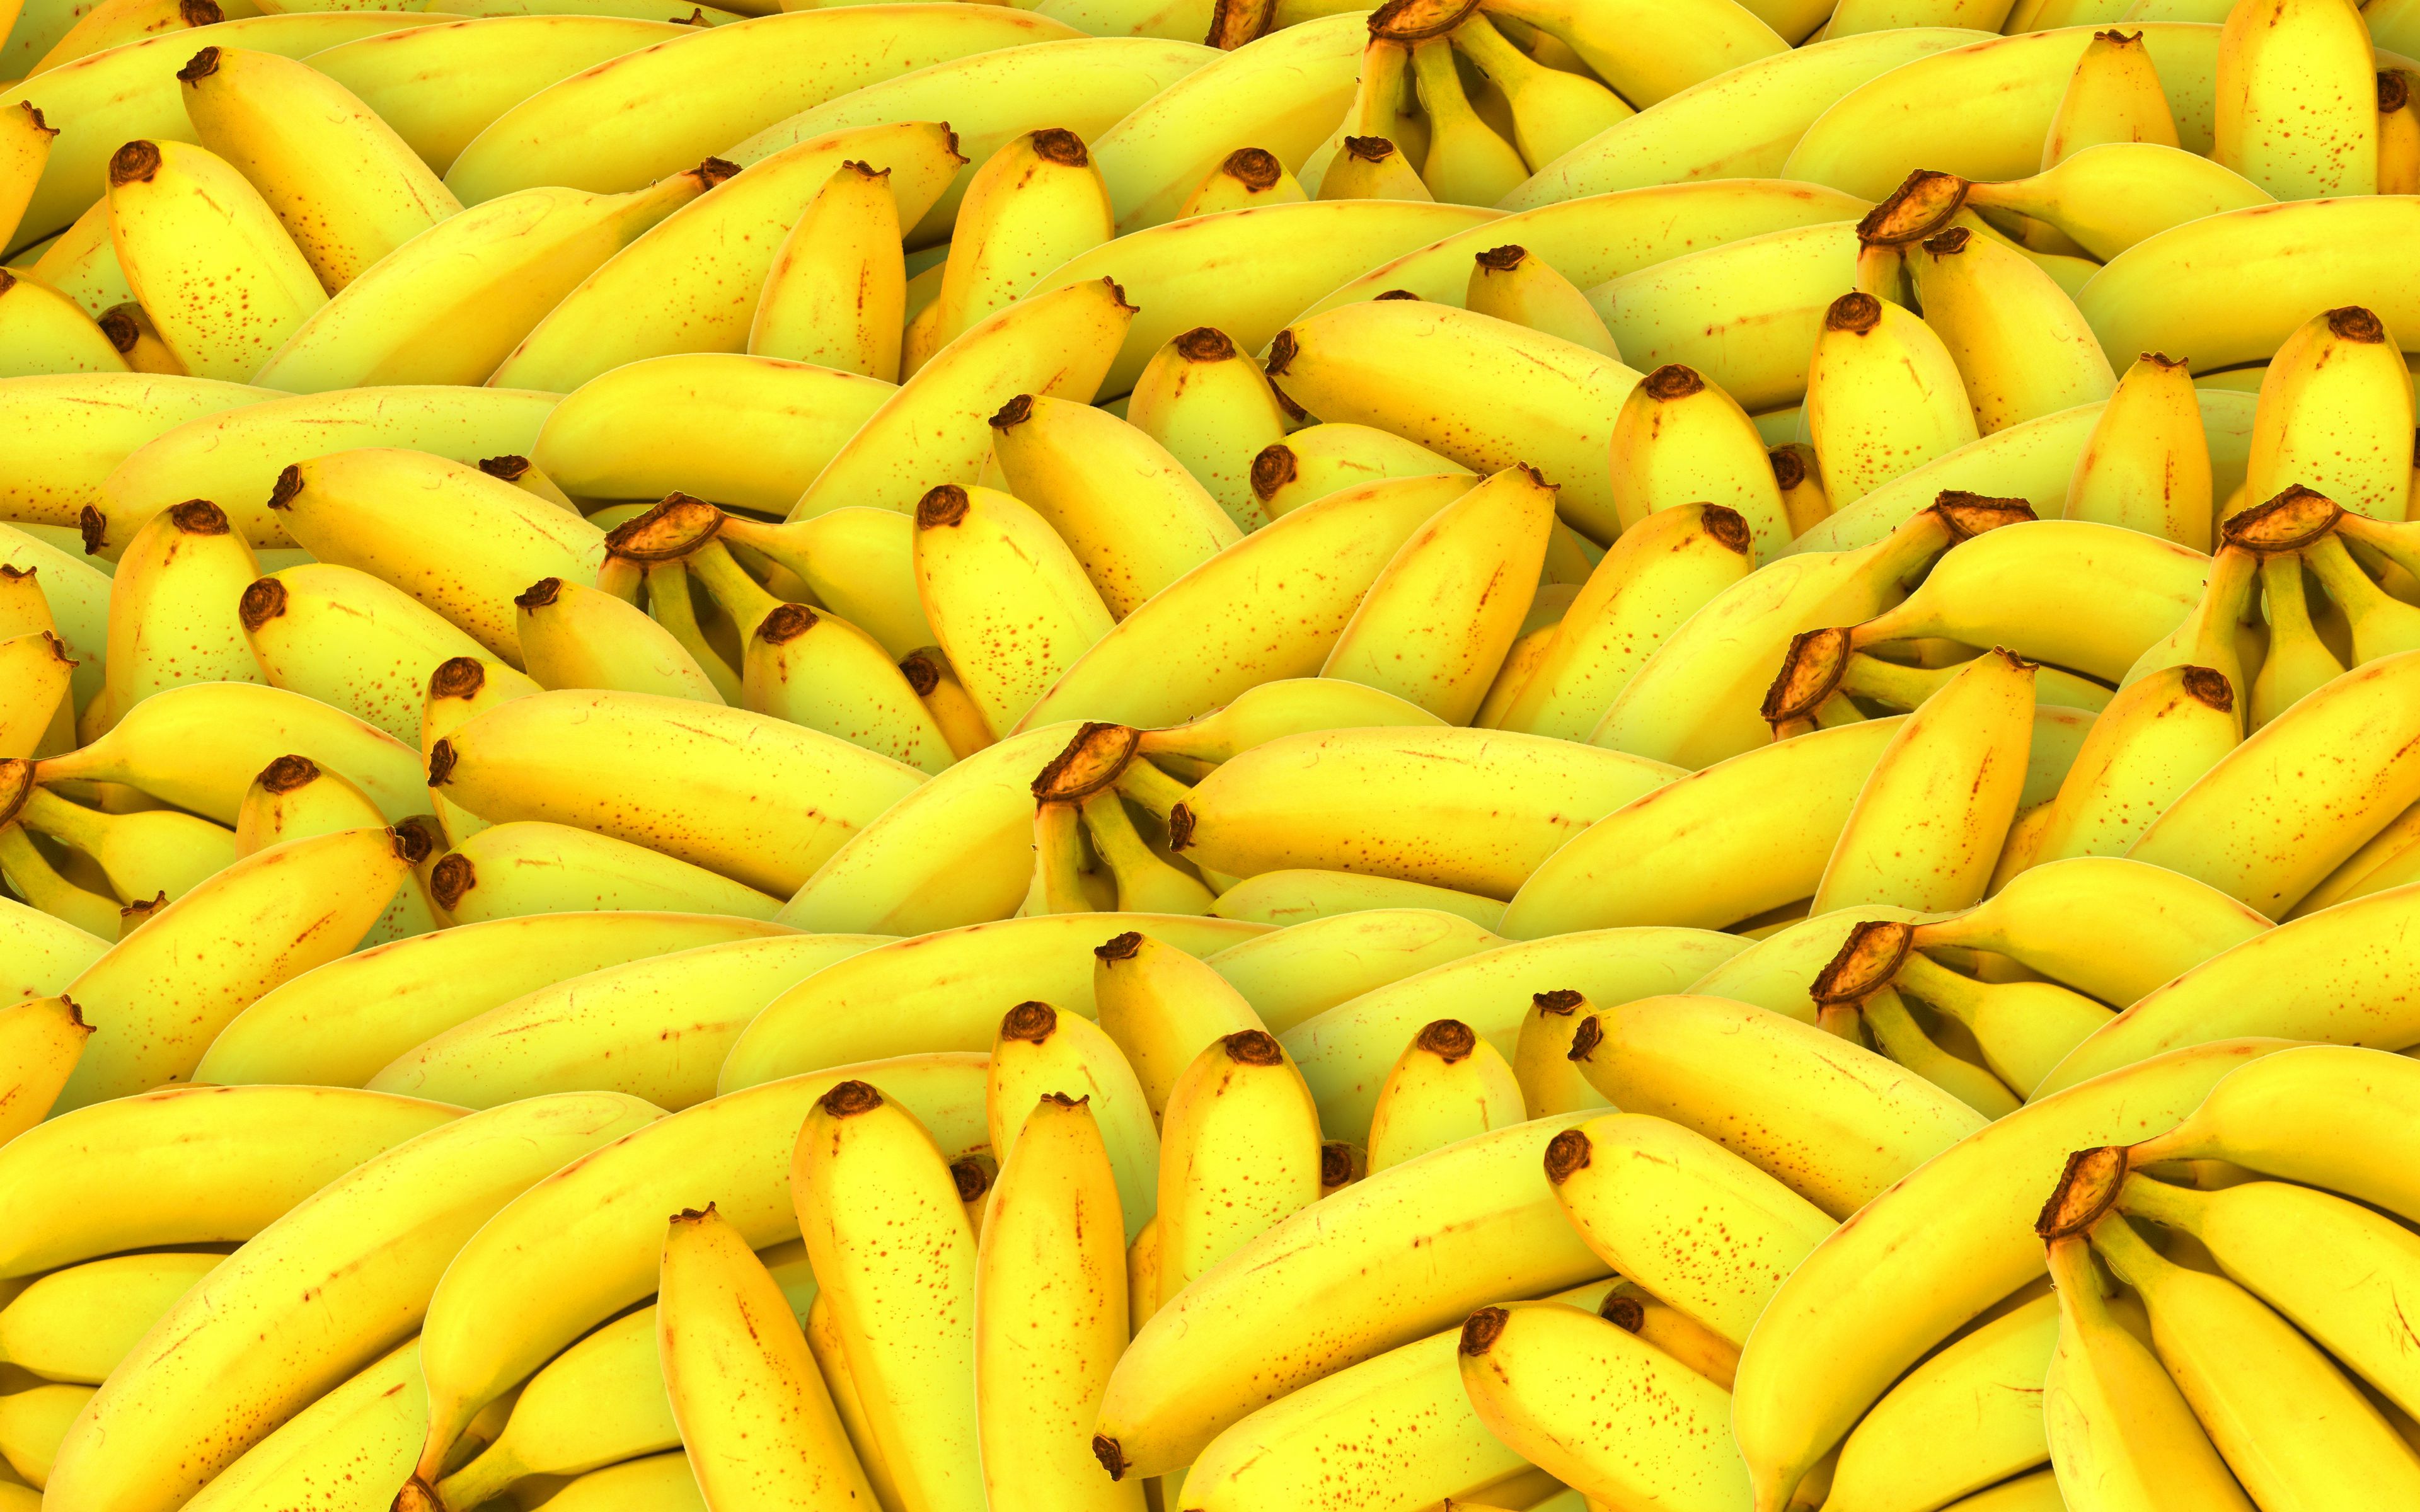 Download Wallpaper 3840x2400 Bananas Fruits Yellow 4k Ultra Hd 1610